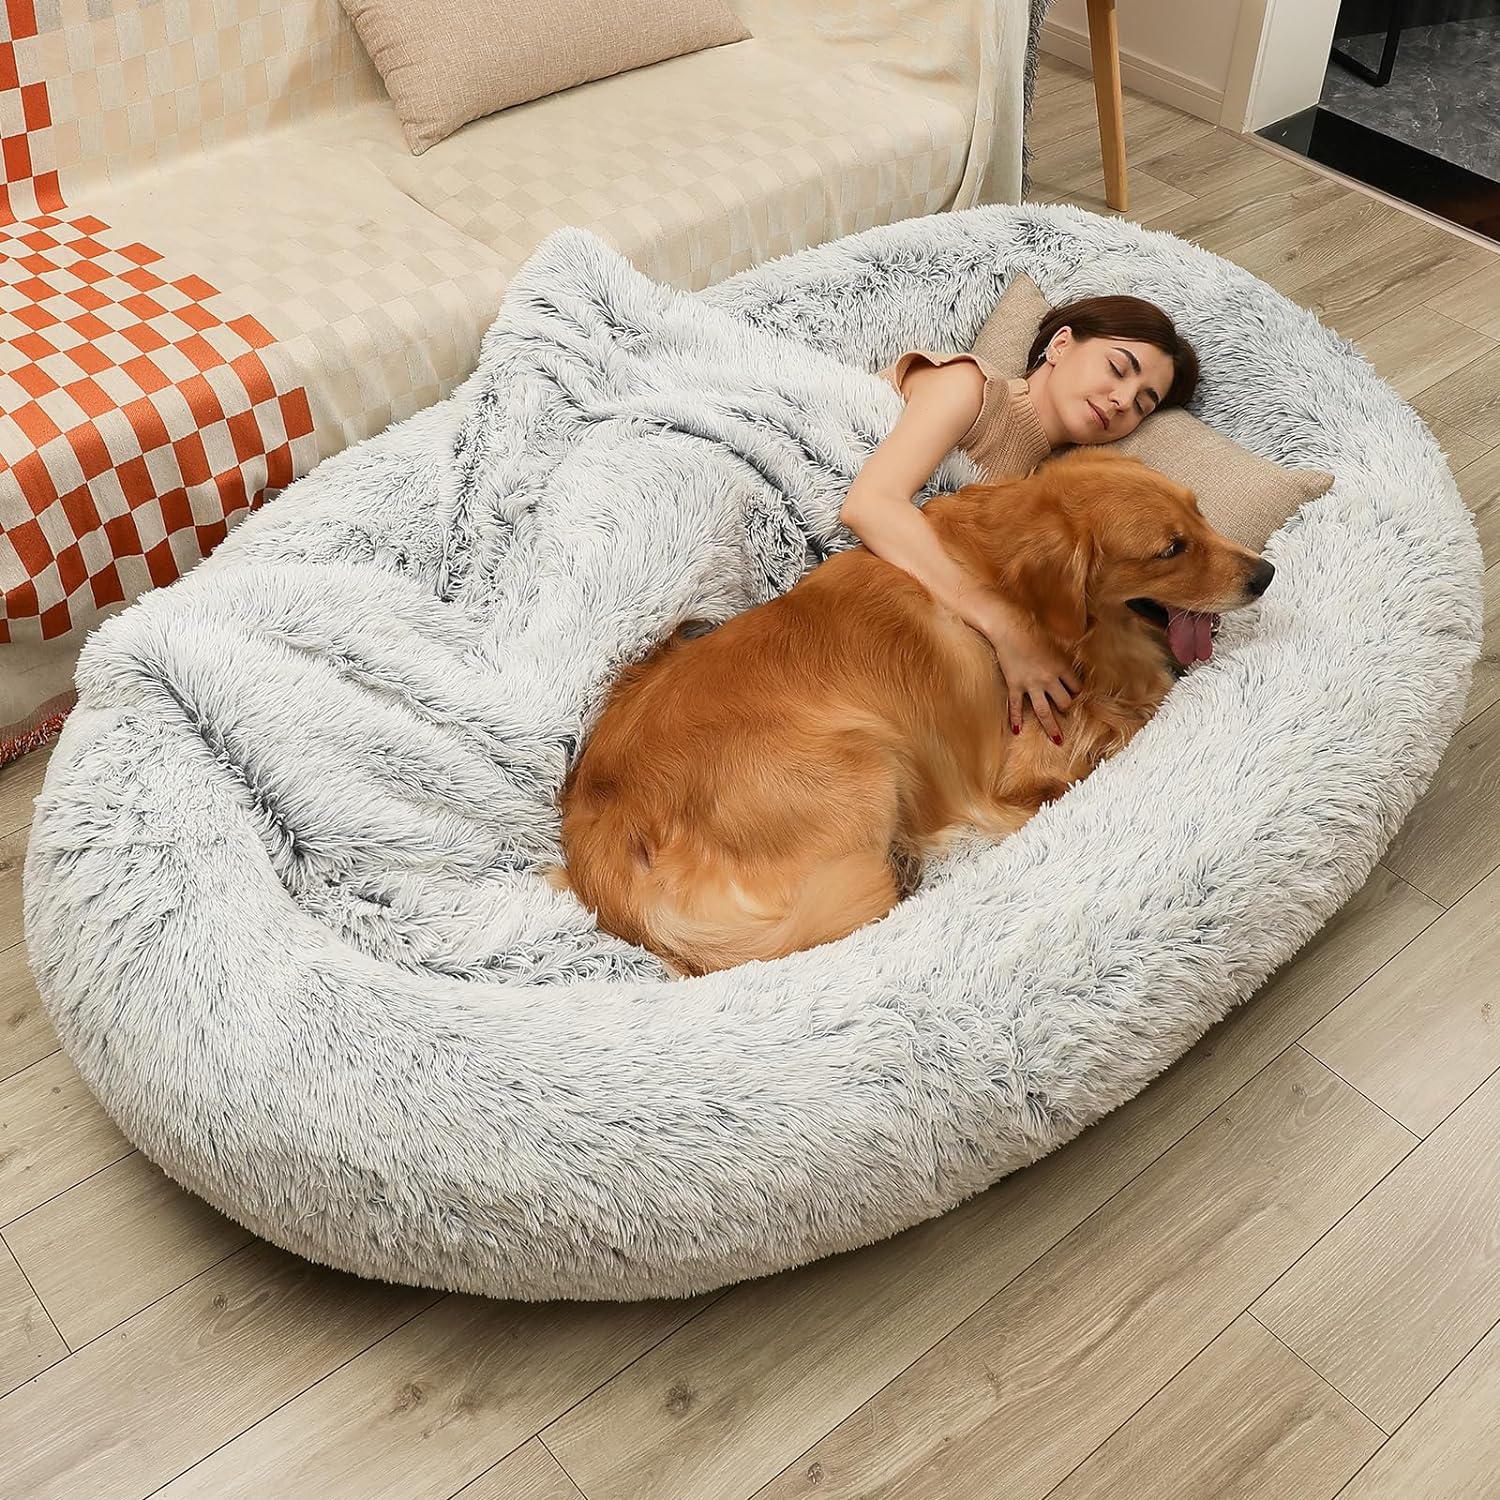 DMTINTA Human Dog Bed 75 * 50 * 14Dog Beds for Large Dogs Giant Dog Bed Human Size Dog Bed for People 3D Sponge Bean Bag Bed Detachable Gradient Grey